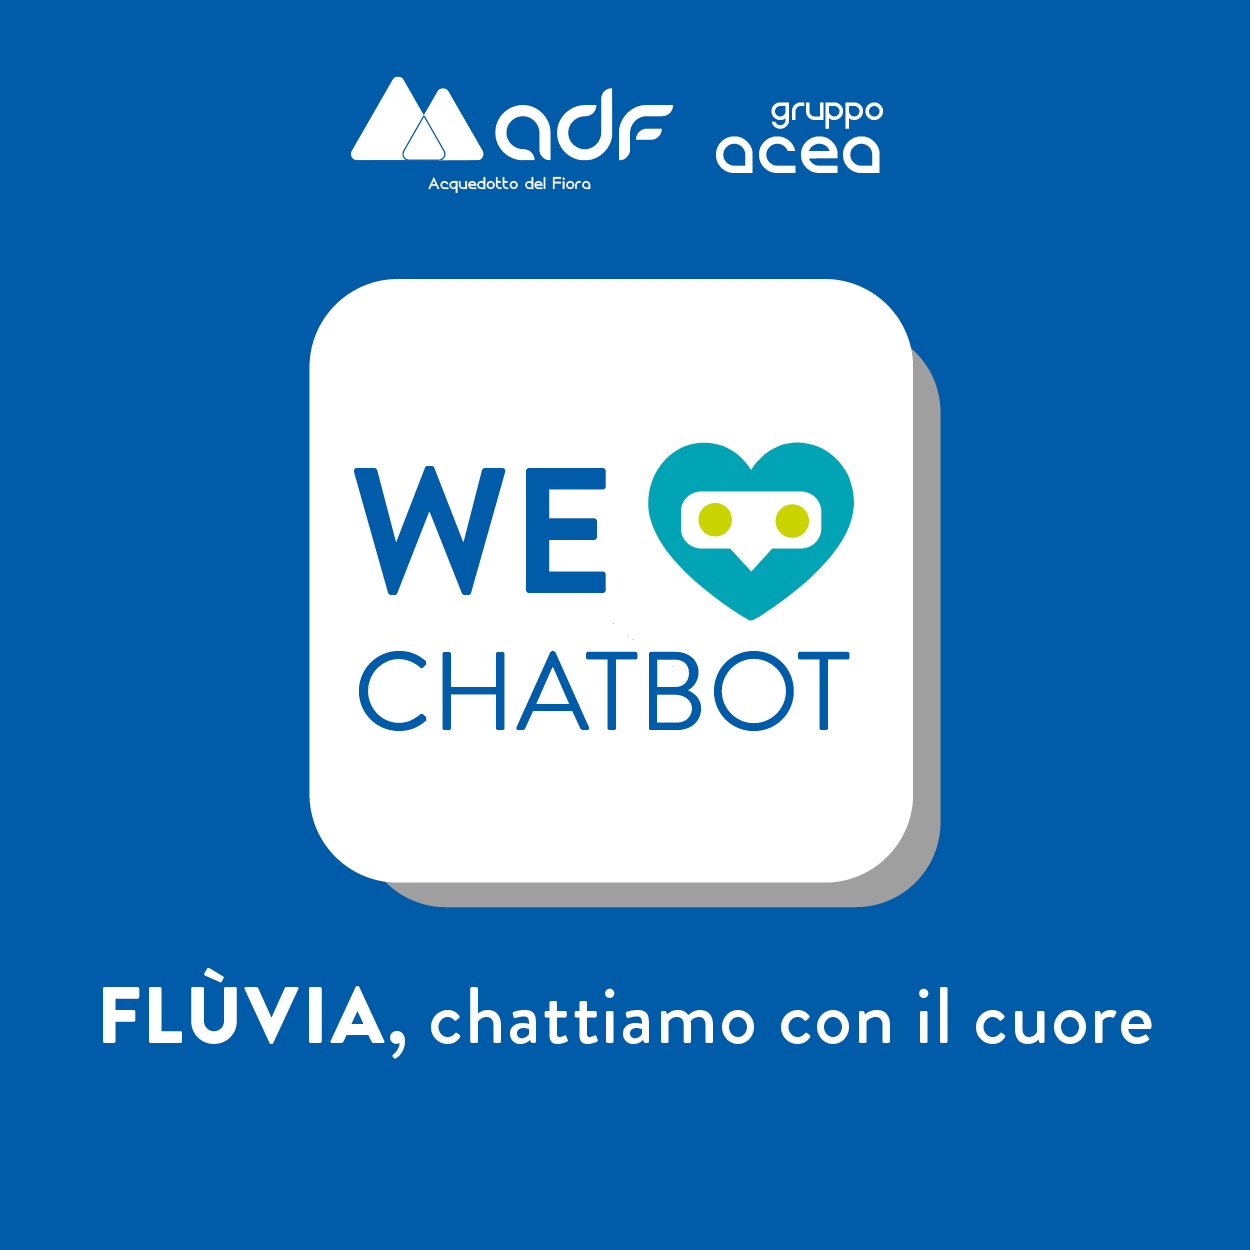 ADF chatbot banner 300×300